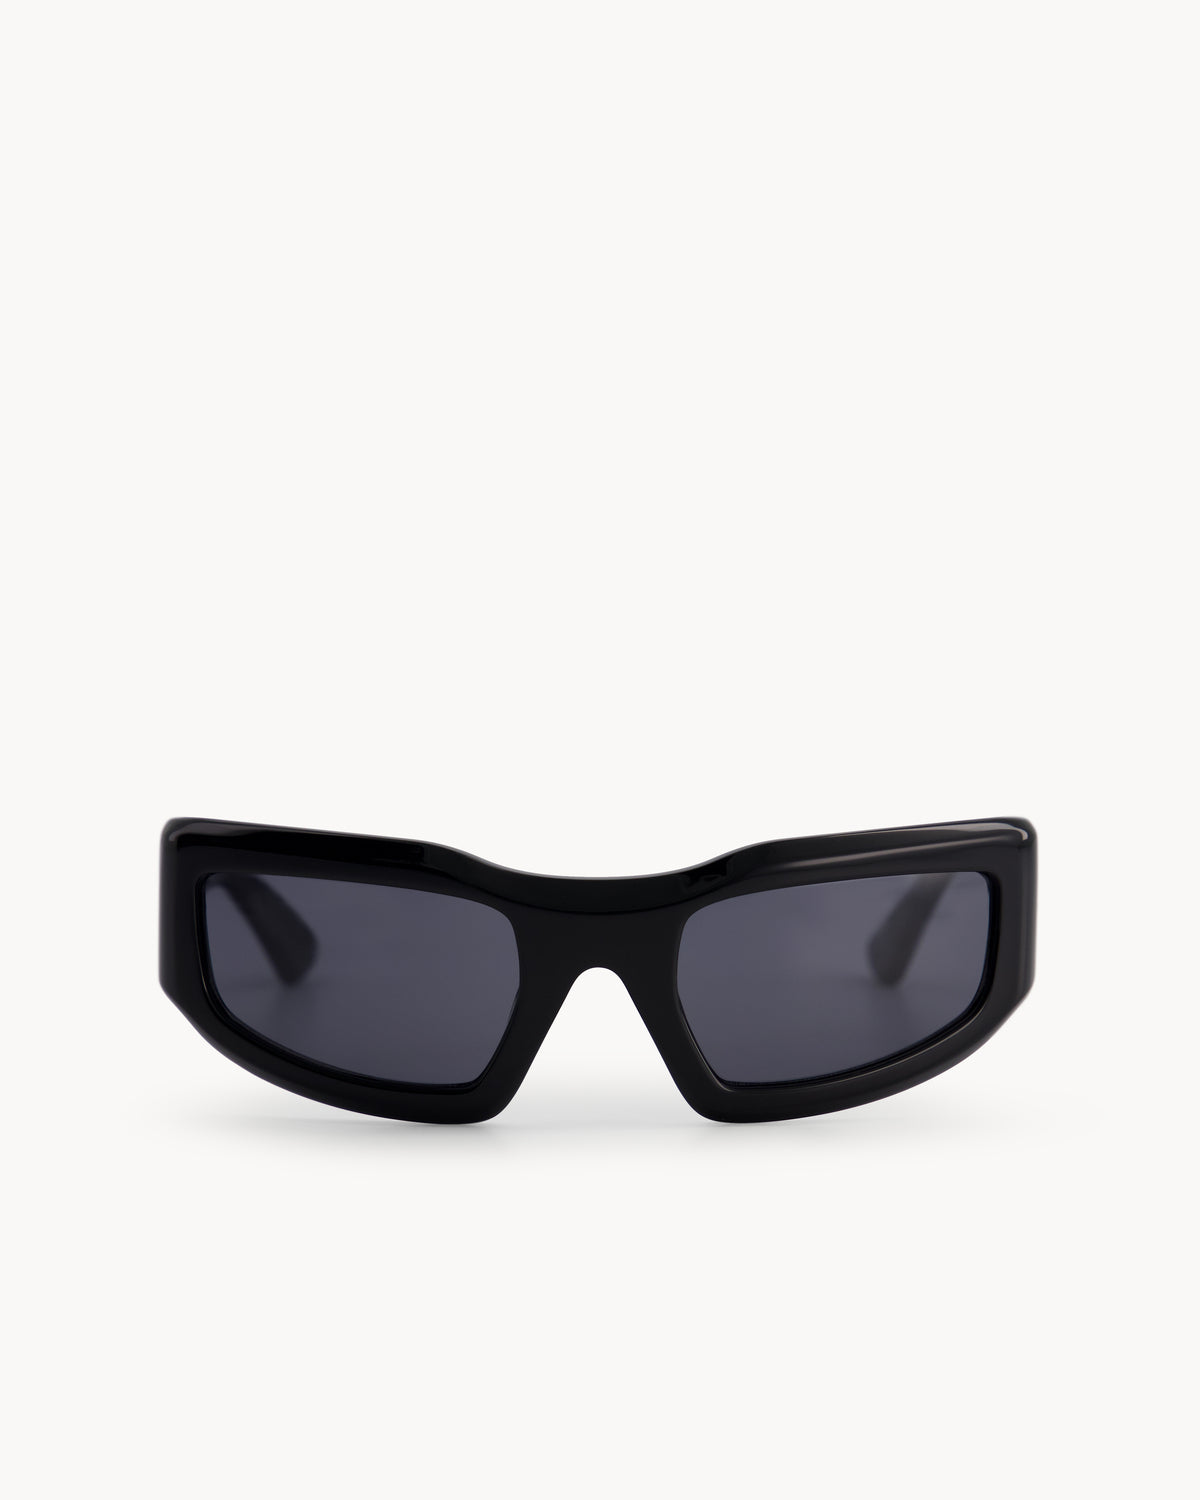 Port Tanger Andalucia Sunglasses in Black Acetate and Black Lenses 1